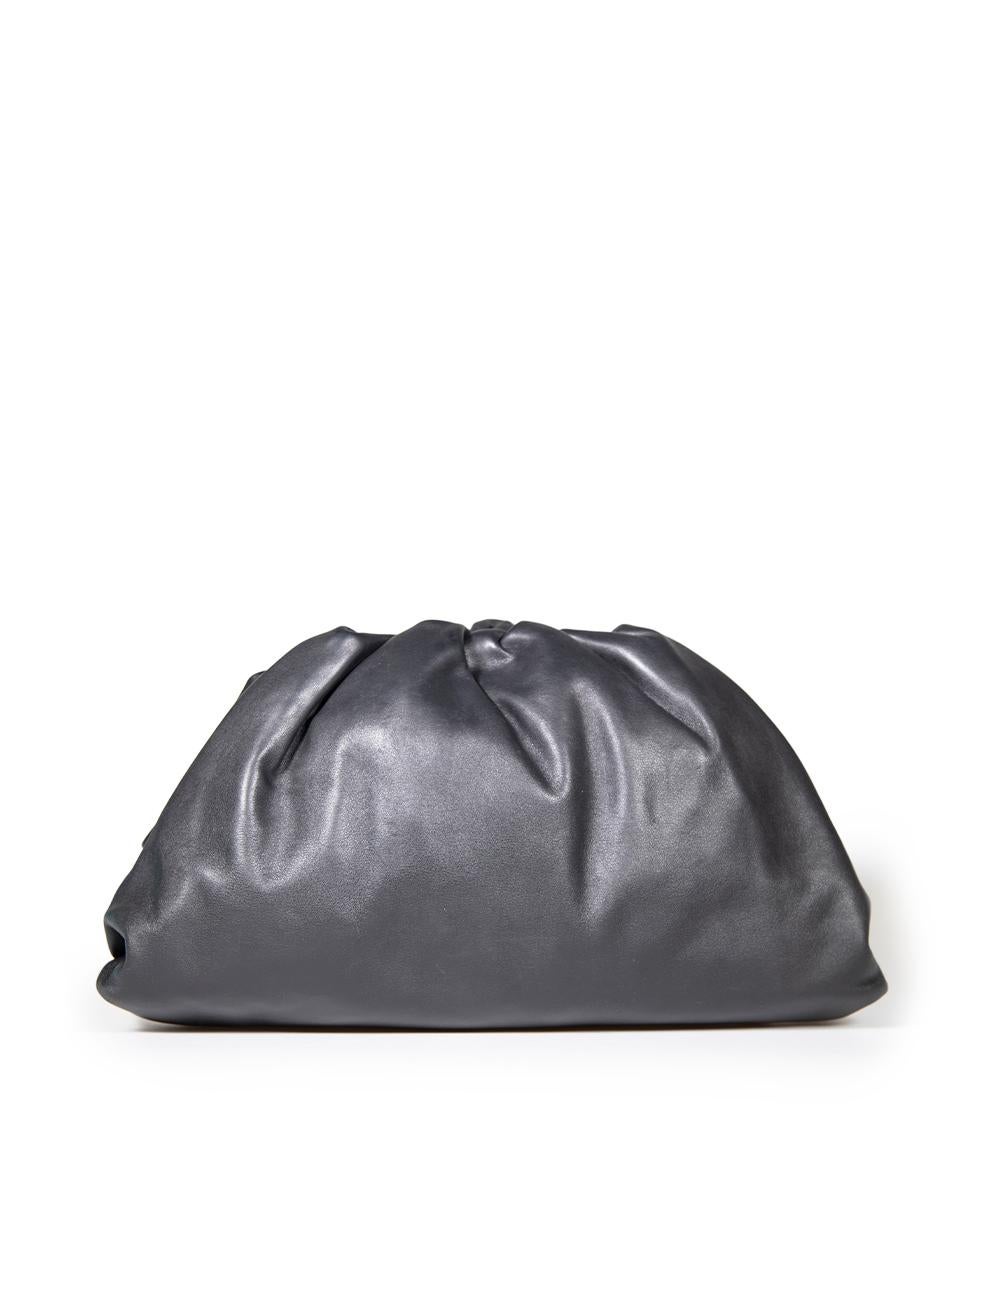 Bottega Veneta Black Leather Pouch Bag In Good Condition For Sale In London, GB